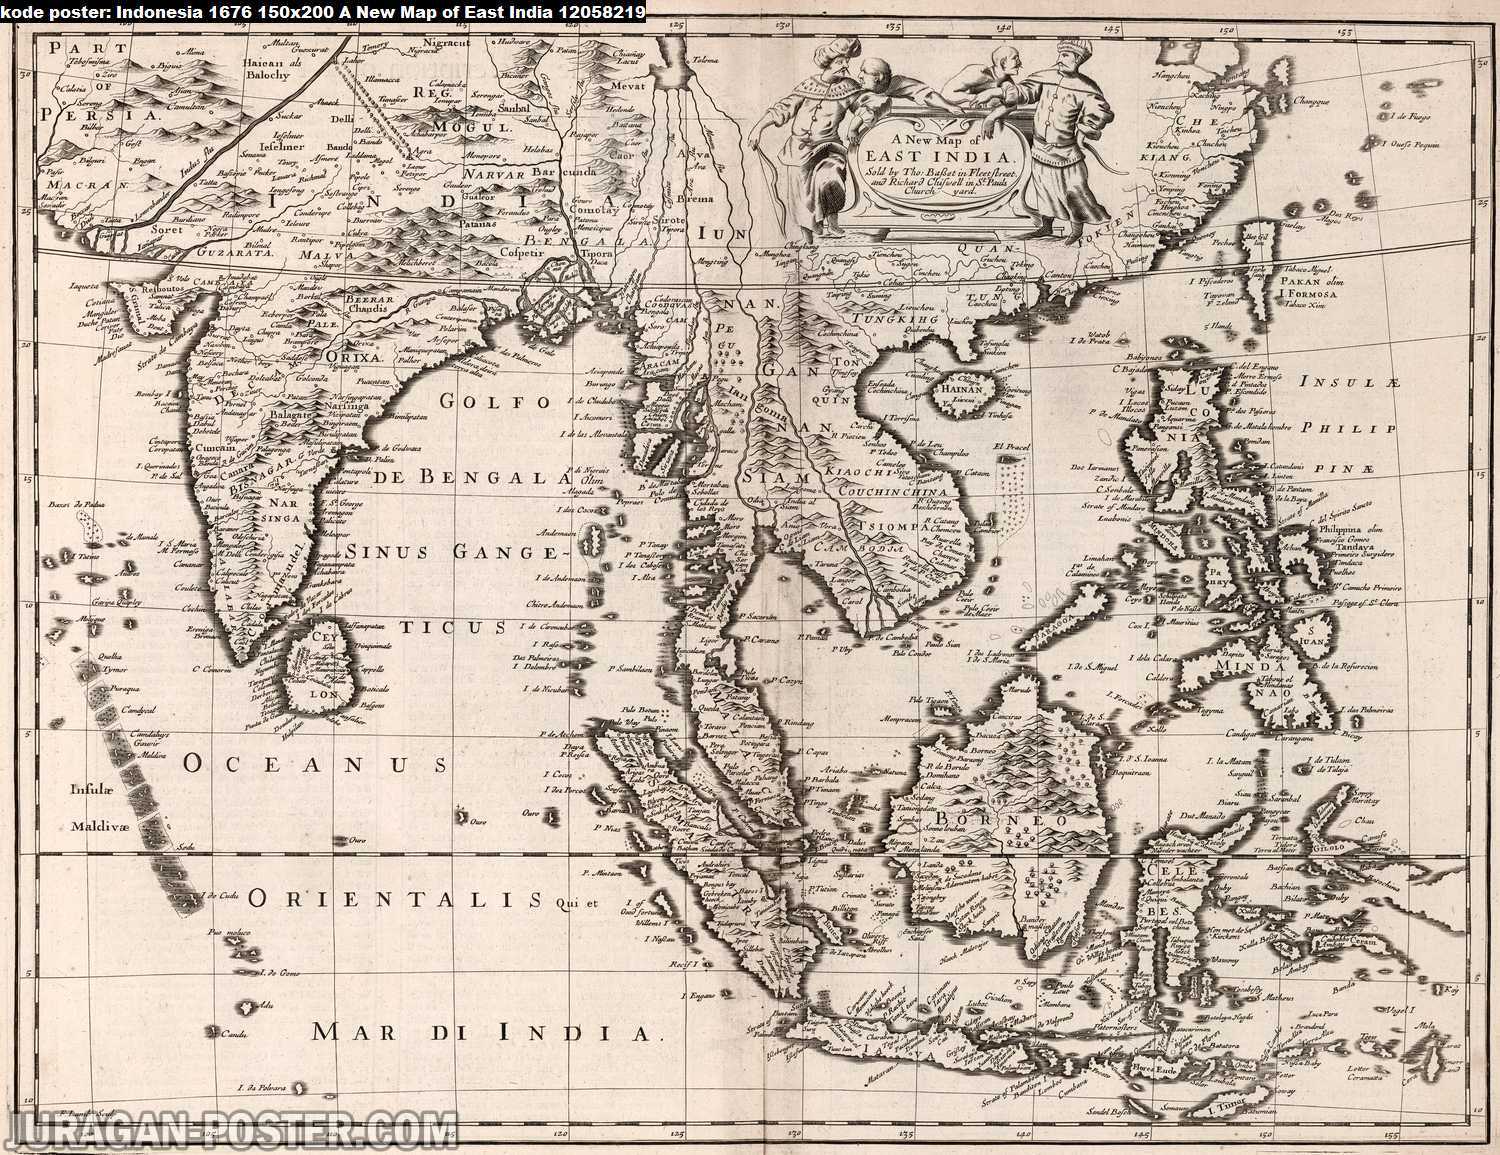 peta indonesia kuno tahun 1676